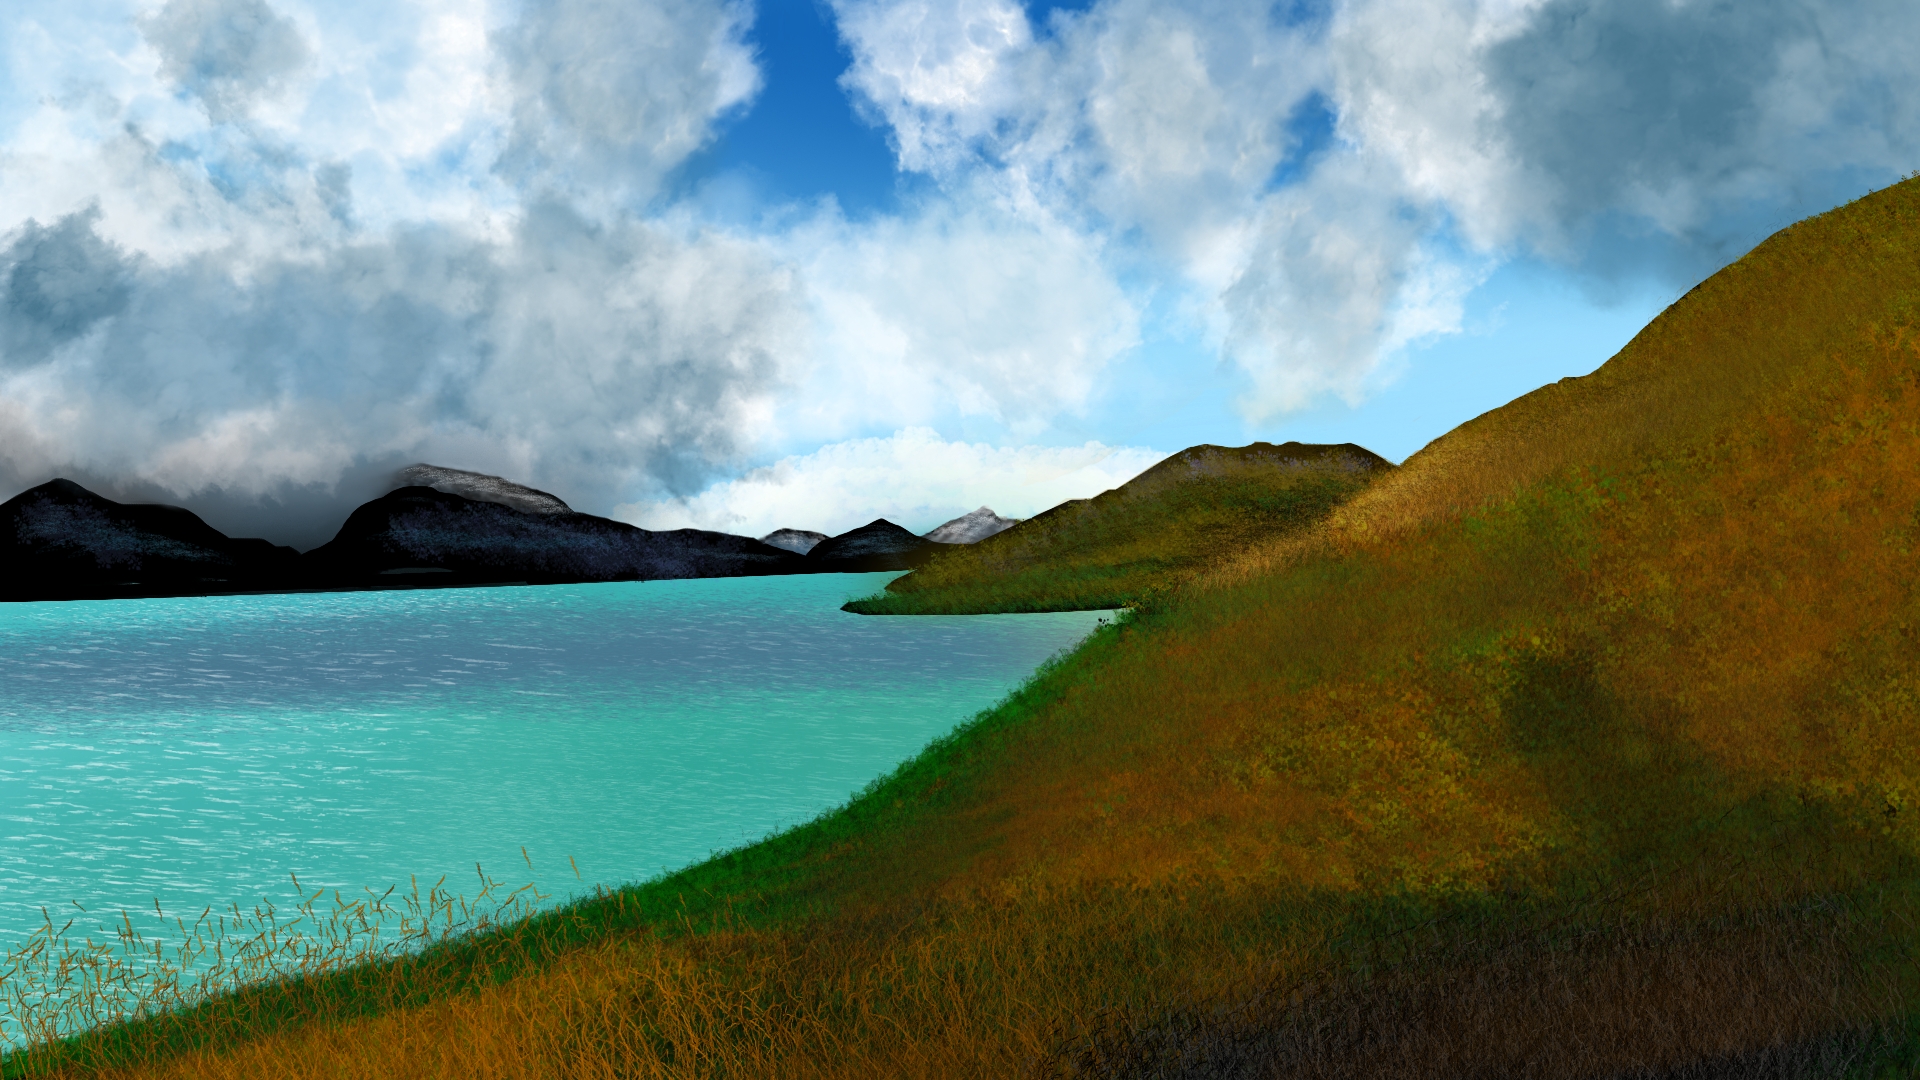 Digital Painting Digital Art Nature Landscape Cliffside 1920x1080